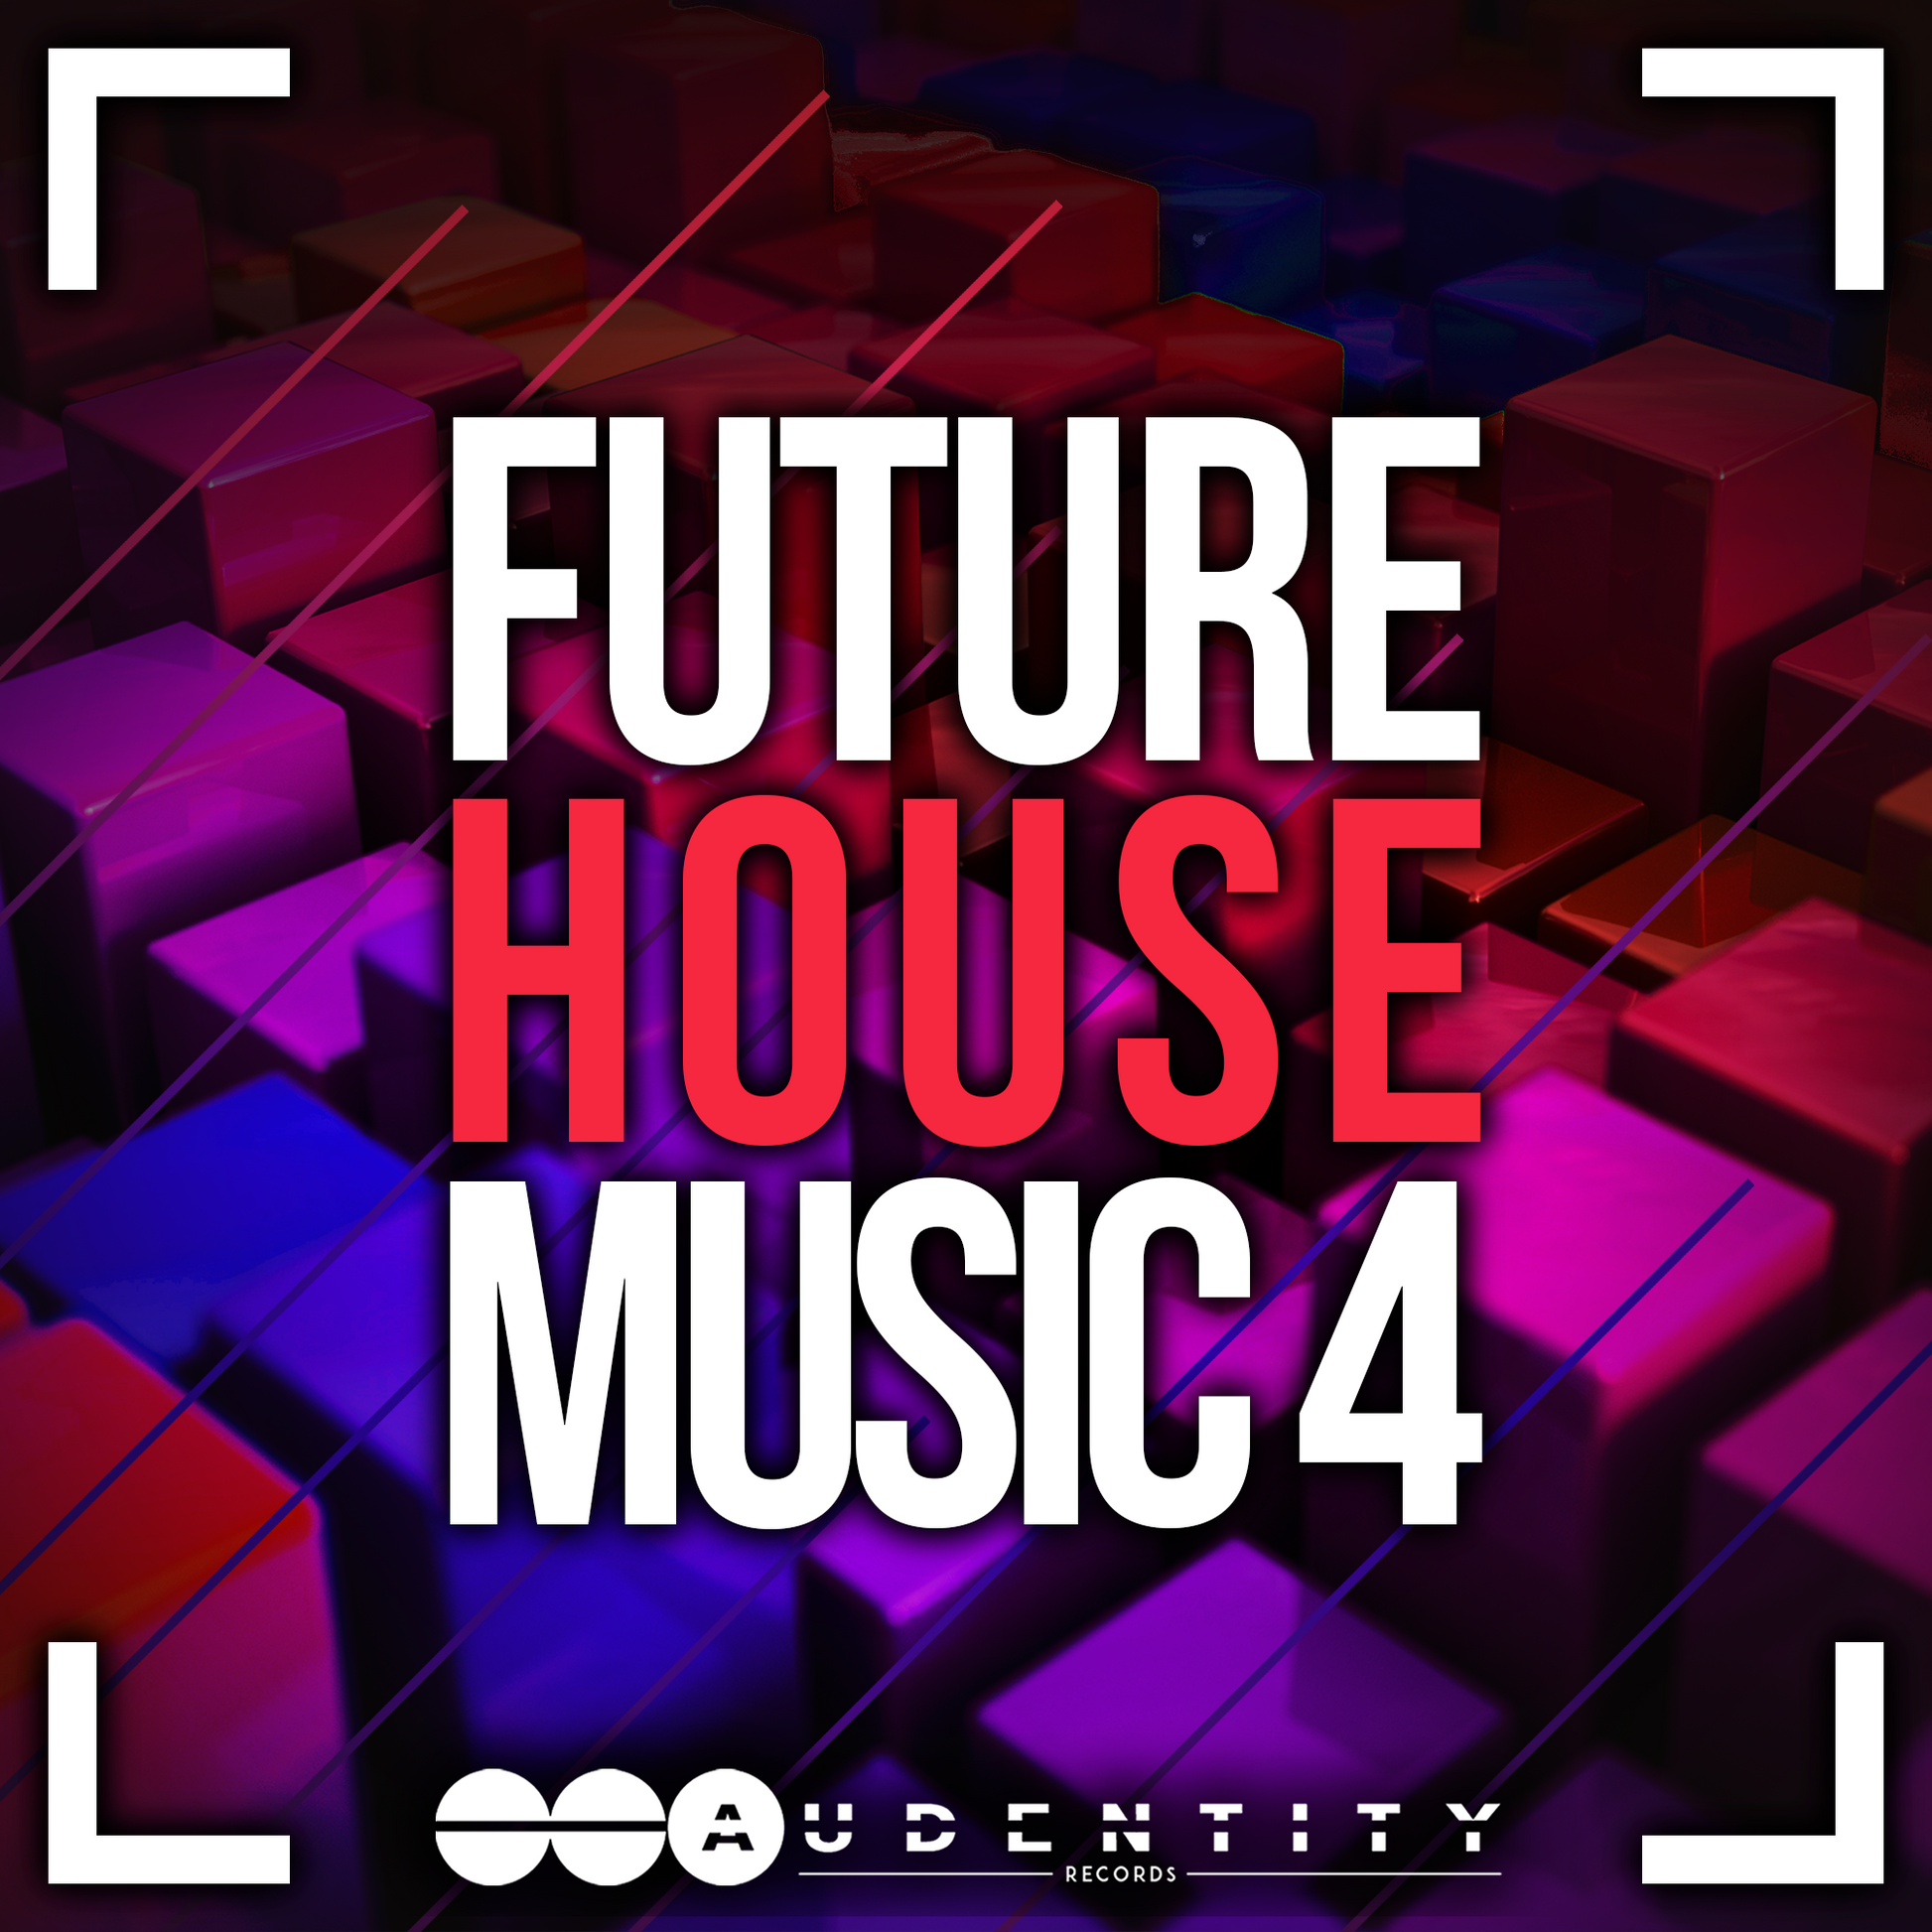 Future House Music 4 - Audentity Records | Samplestore